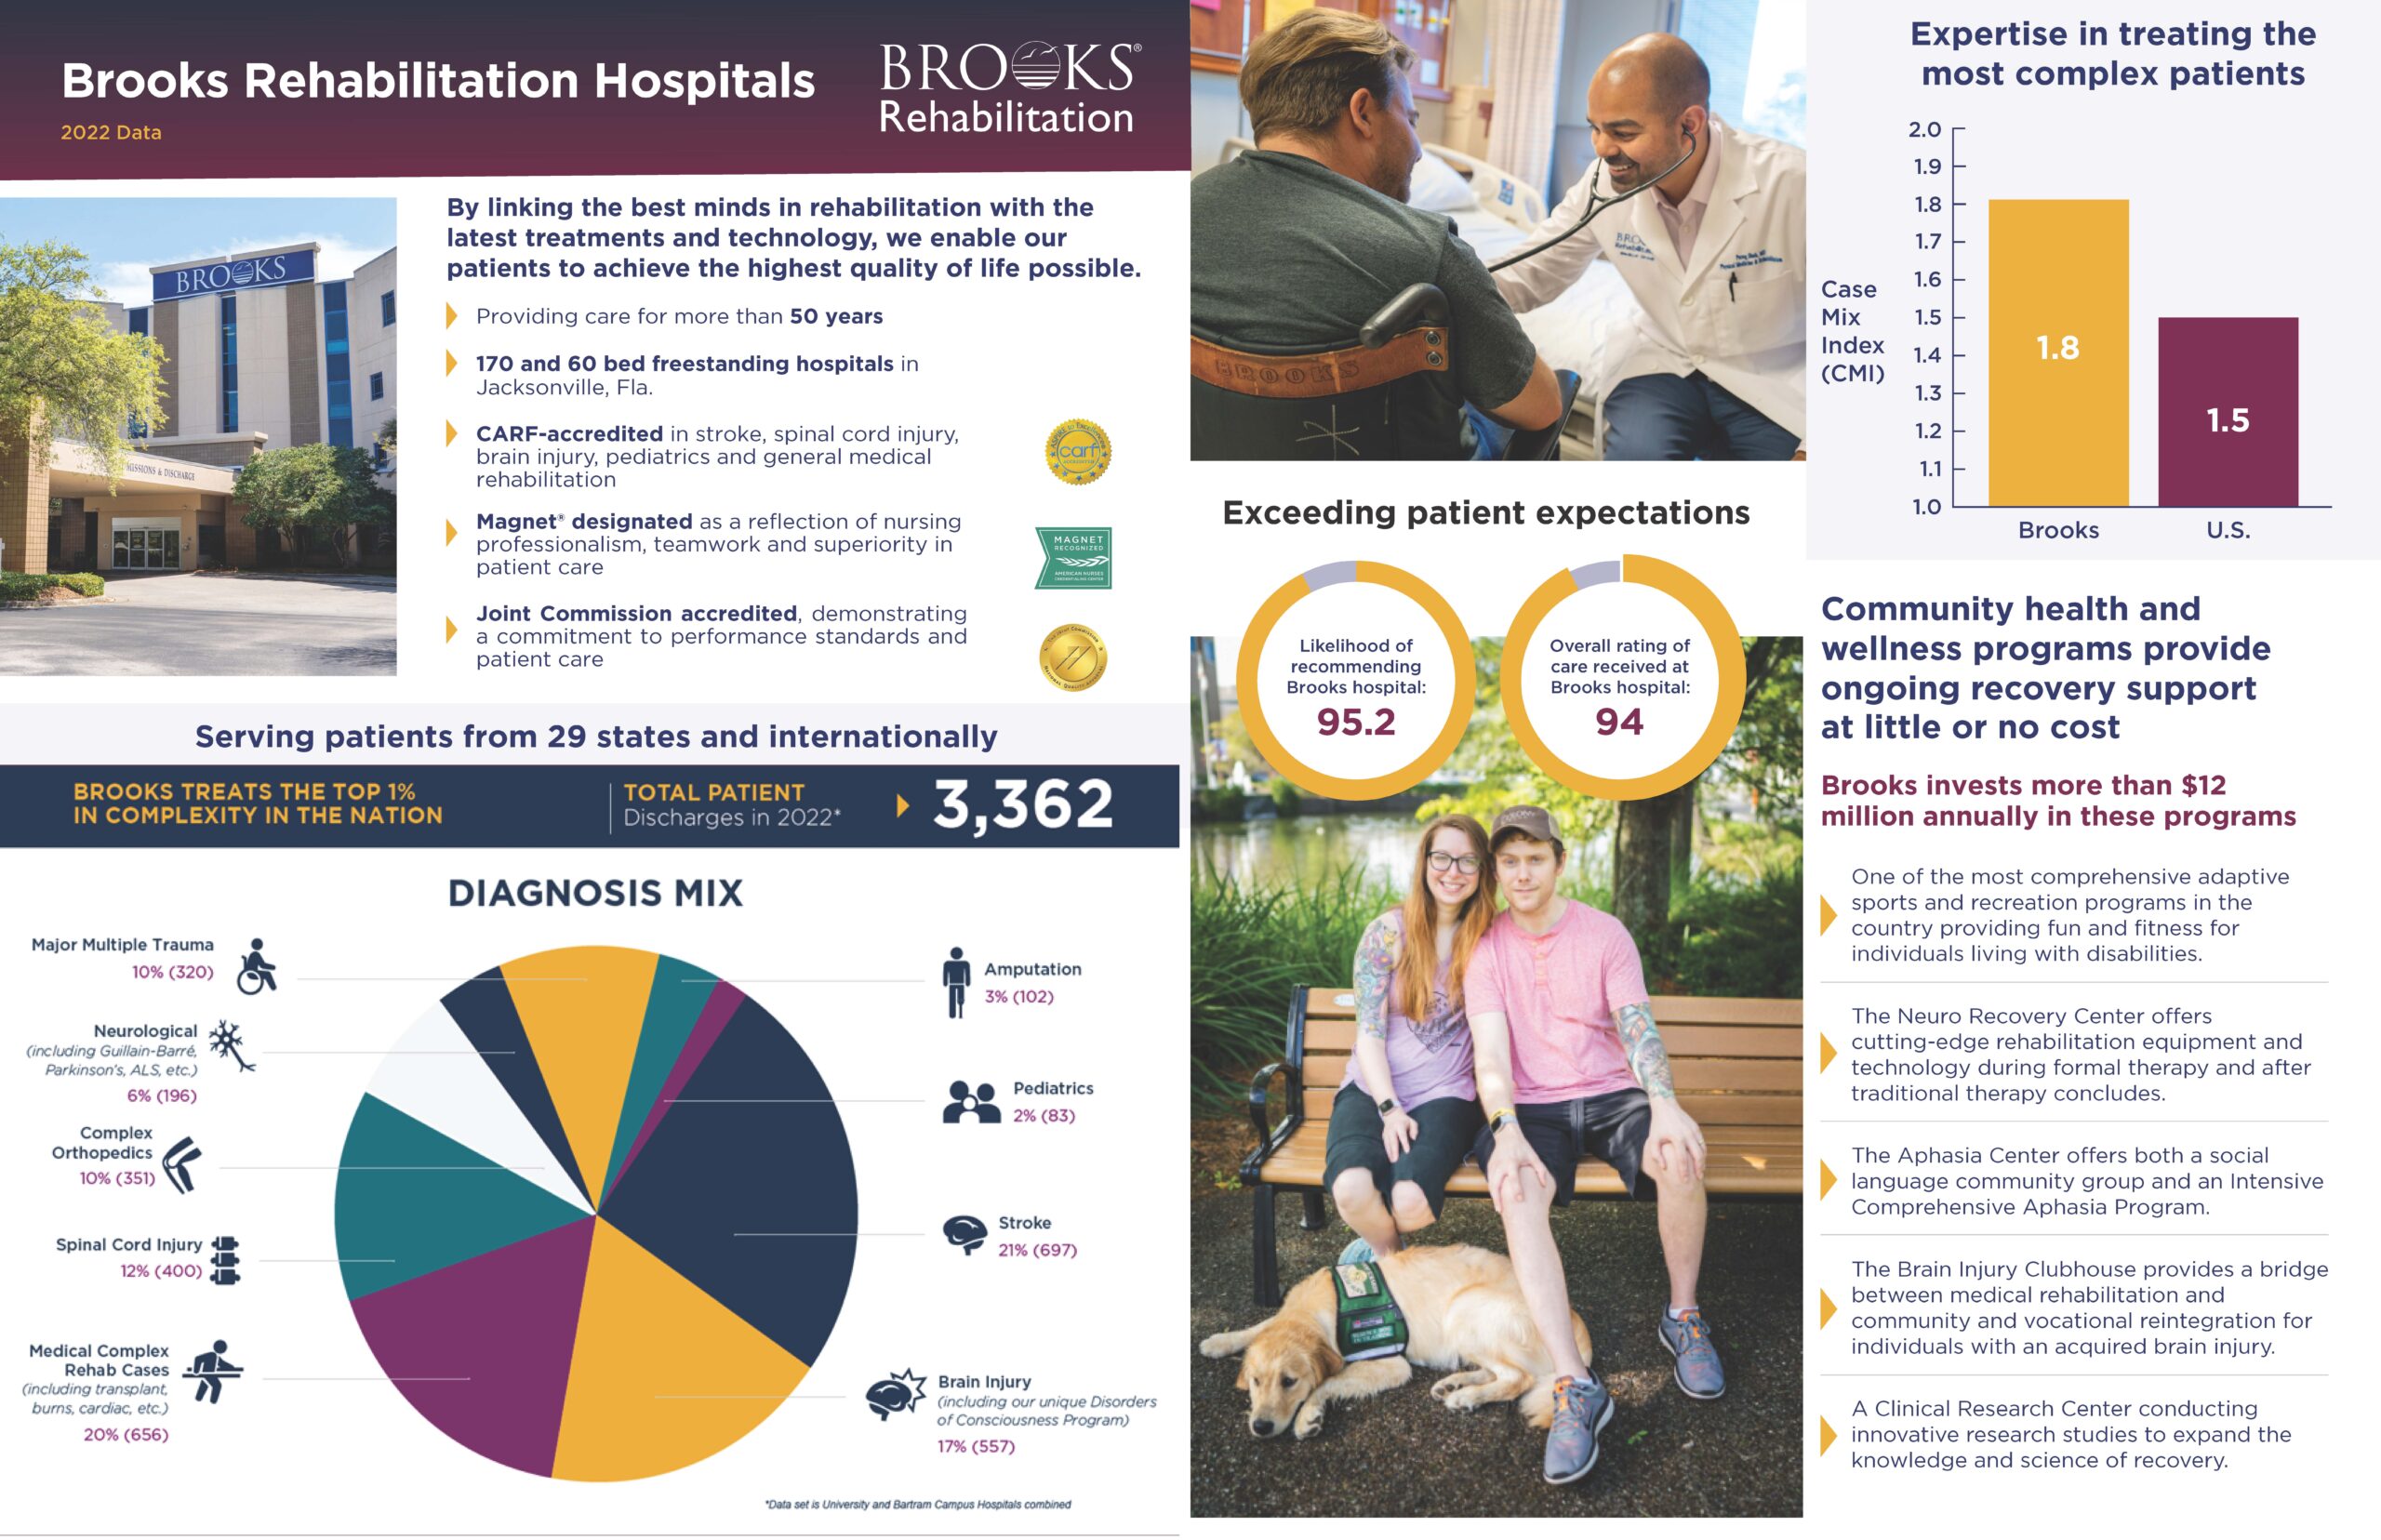 Brooks Rehabilitation Hospital patient outcomes for 2022. 